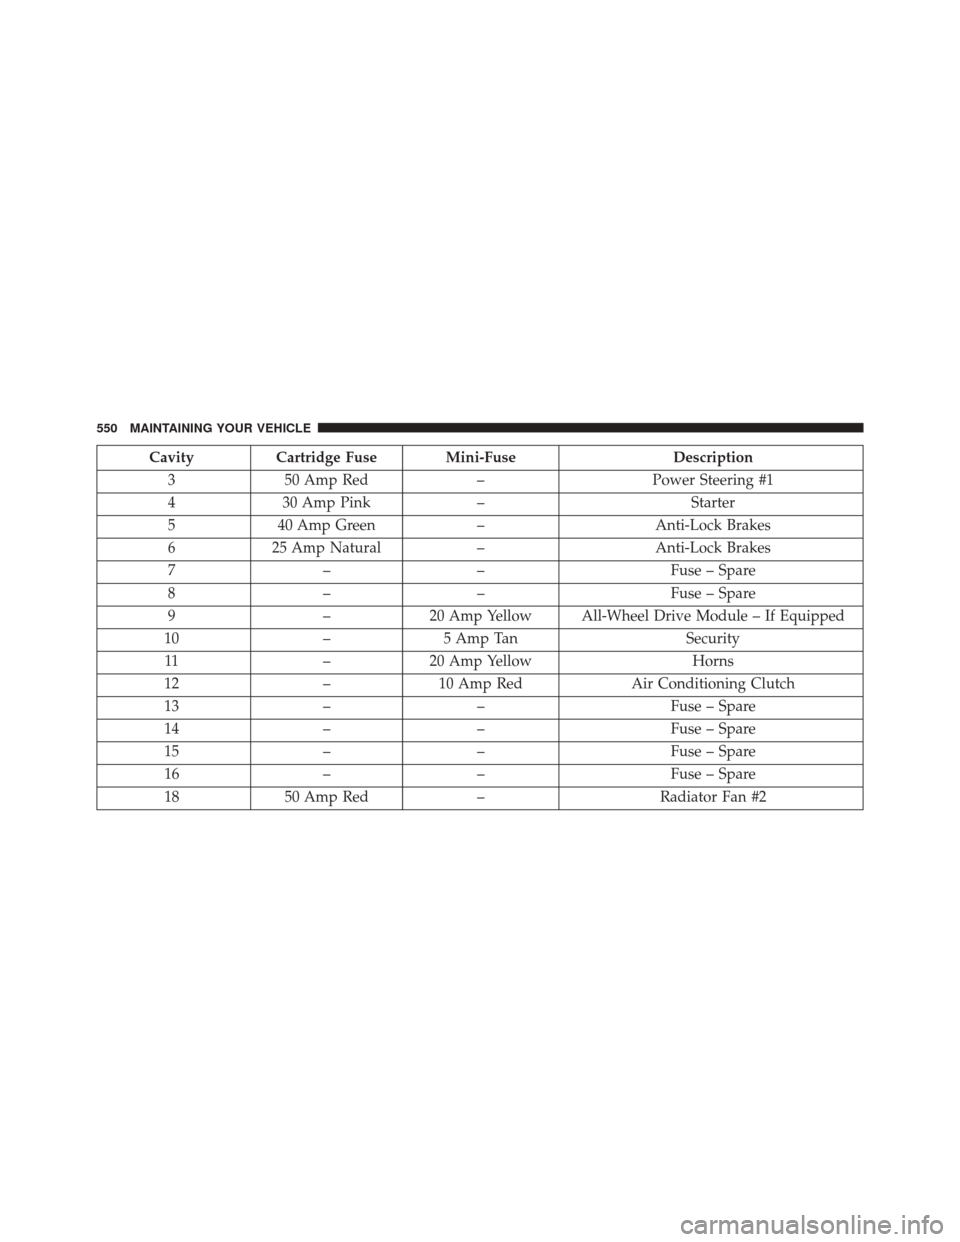 CHRYSLER 300 2014 2.G Owners Manual CavityCartridge Fuse Mini-Fuse Description
3 50 Amp Red –Power Steering #1
4 30 Amp Pink – Starter
5 40 Amp Green –Anti-Lock Brakes
6 25 Amp Natural –Anti-Lock Brakes
7 –– Fuse – Spare
8